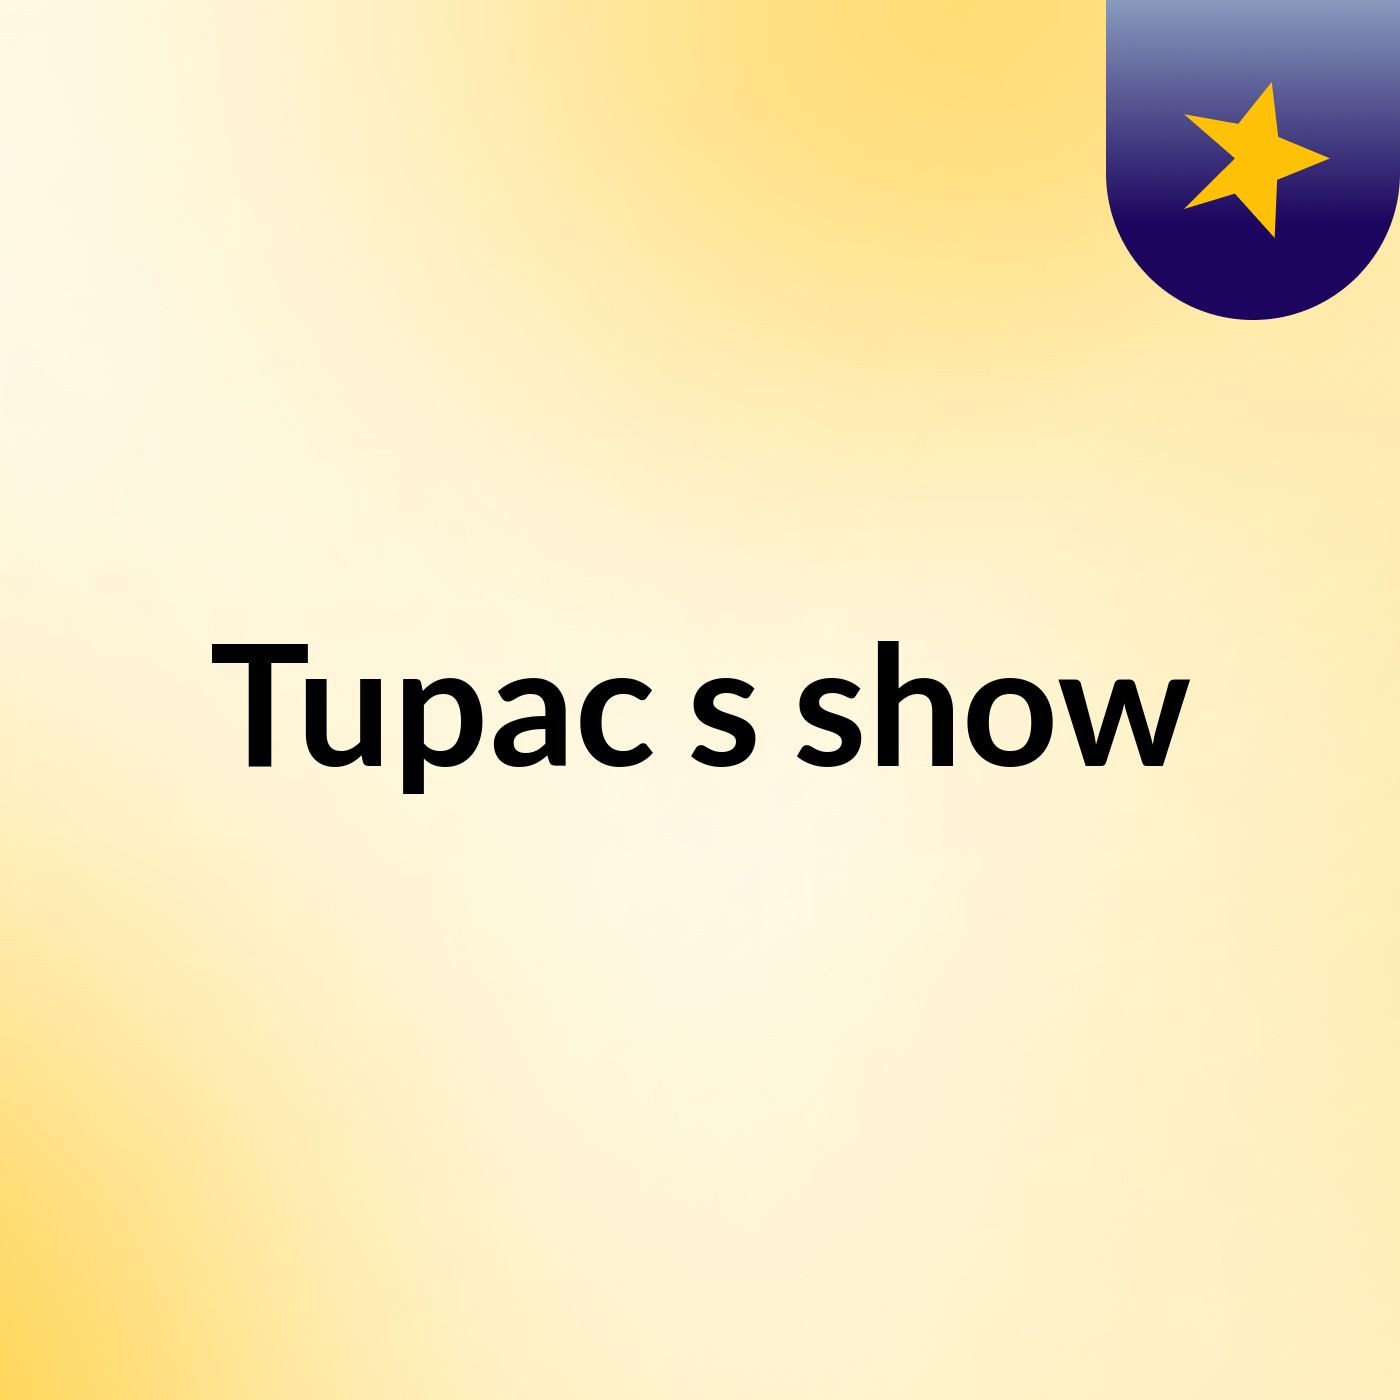 Tupac's show